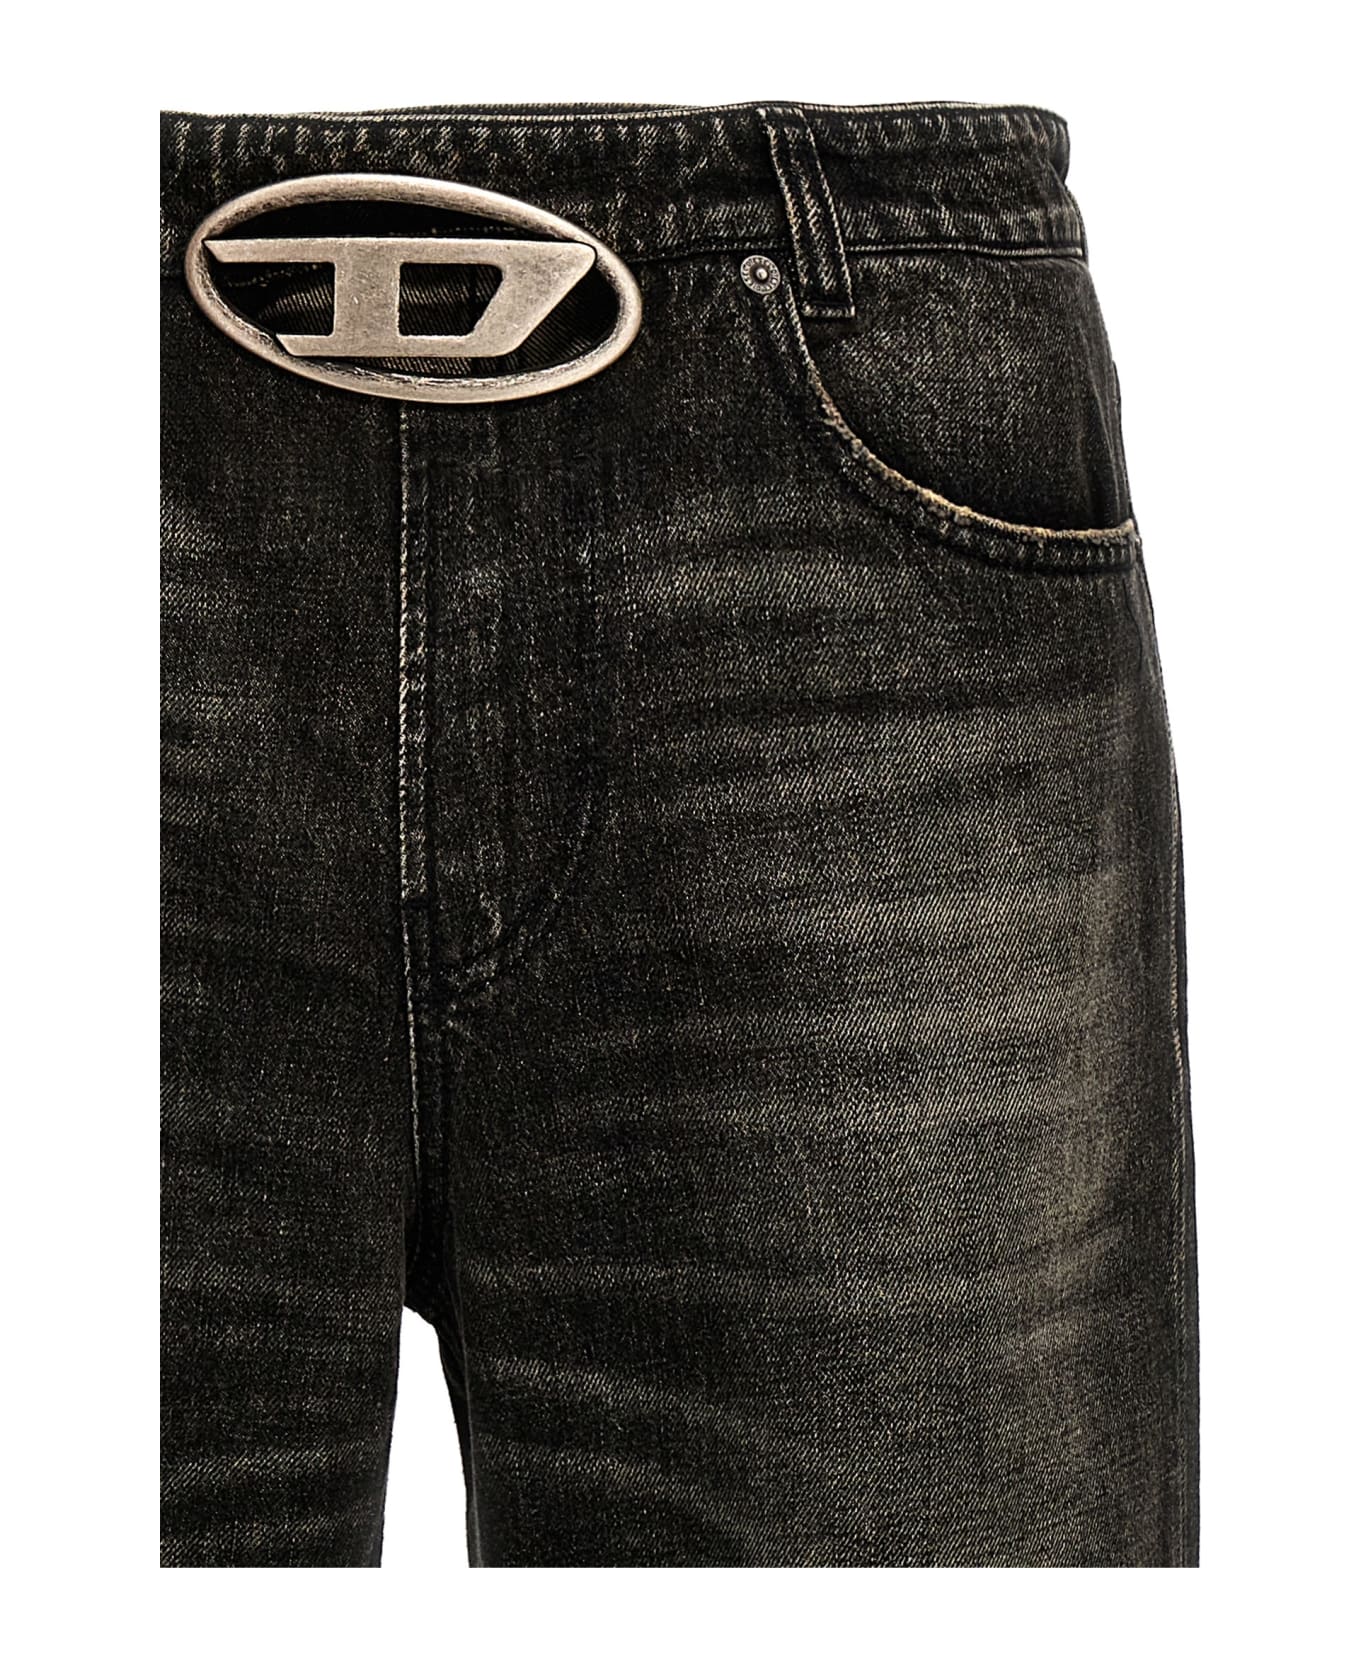 Diesel '2010 D-macs-s2' Jeans - Black   デニム